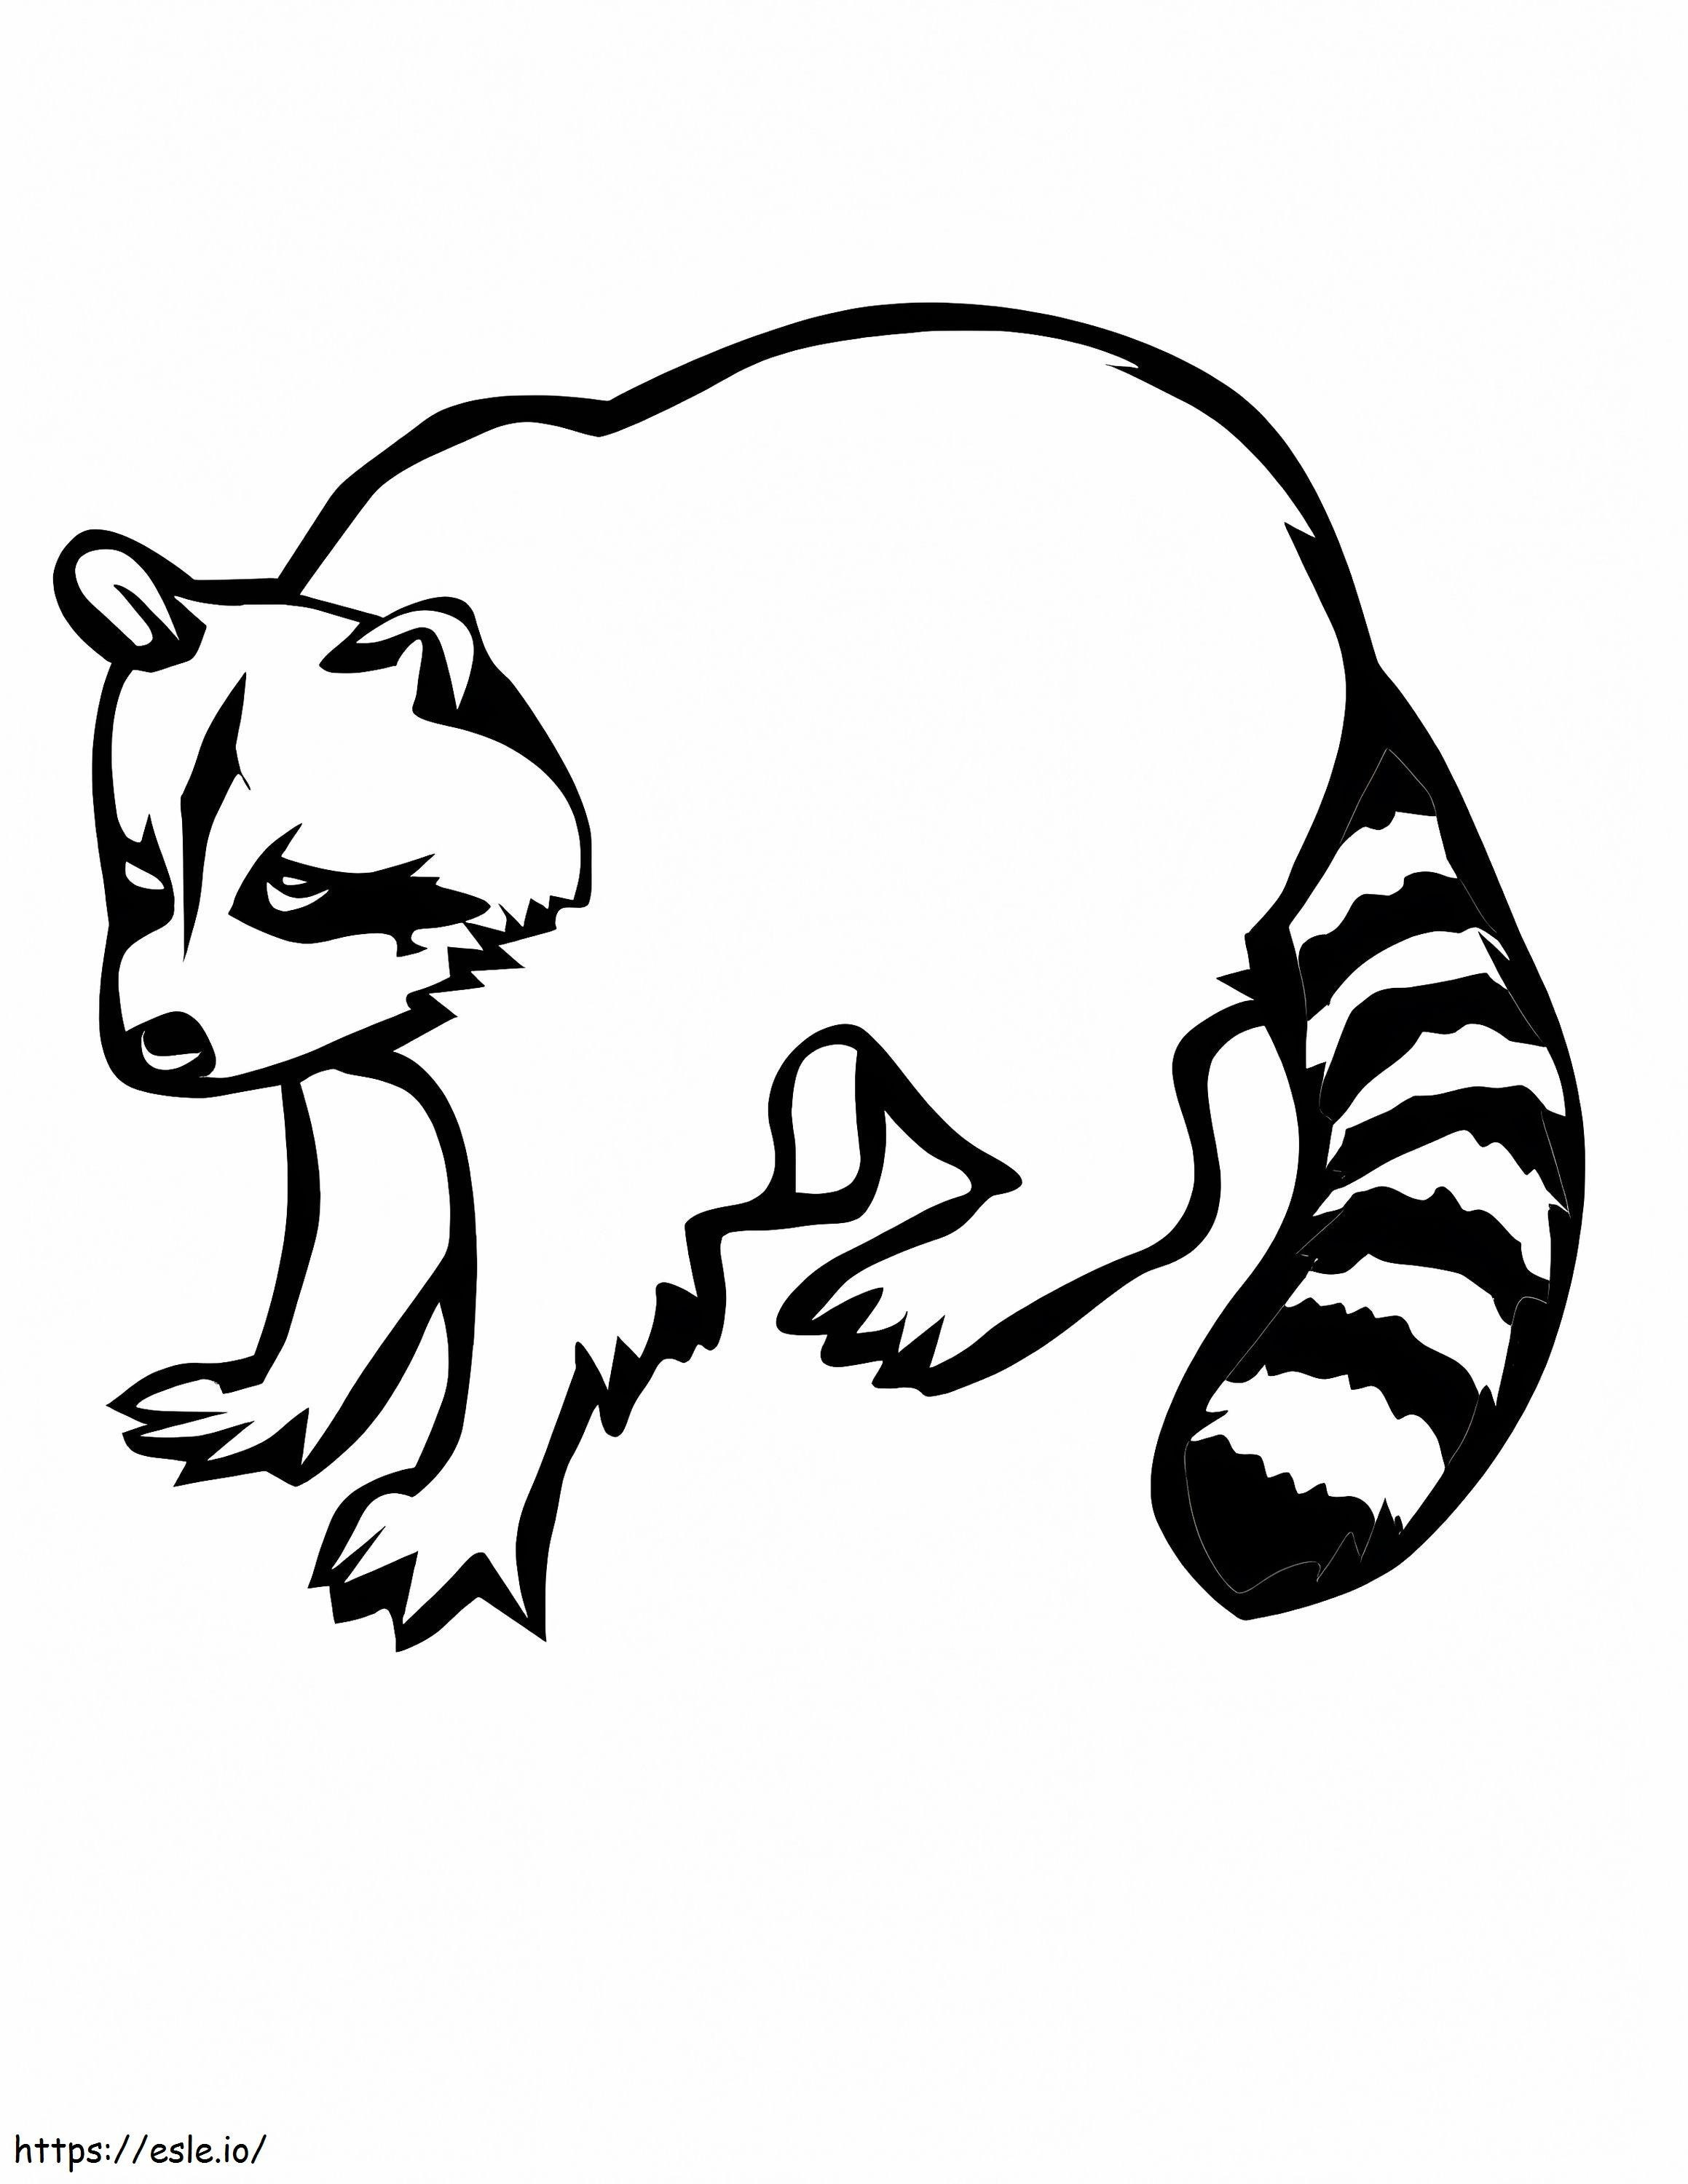 Big Raccoon coloring page